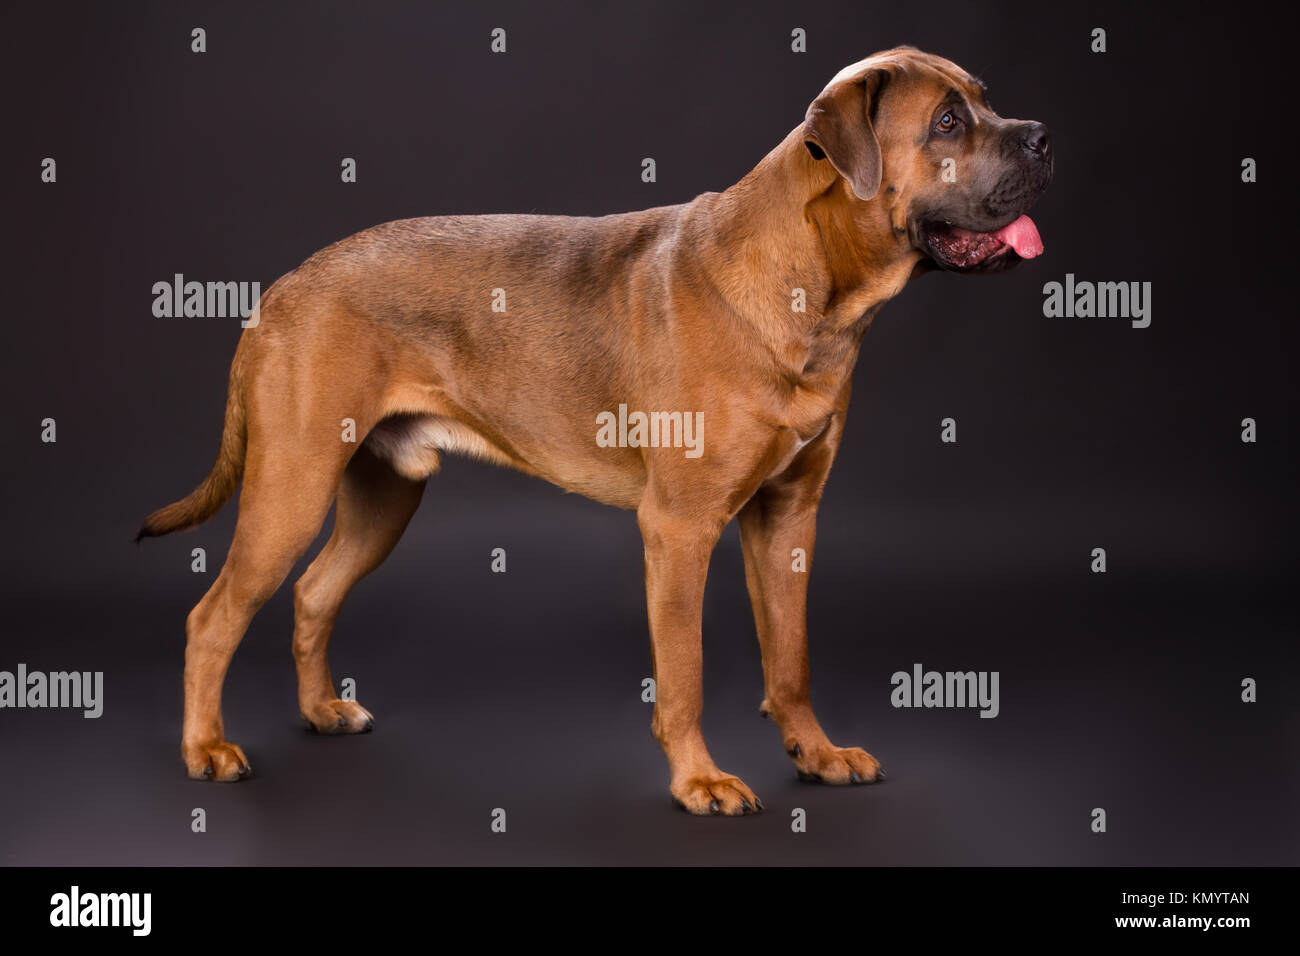 Powerful and dangerous pedigreed dog. Stock Photo